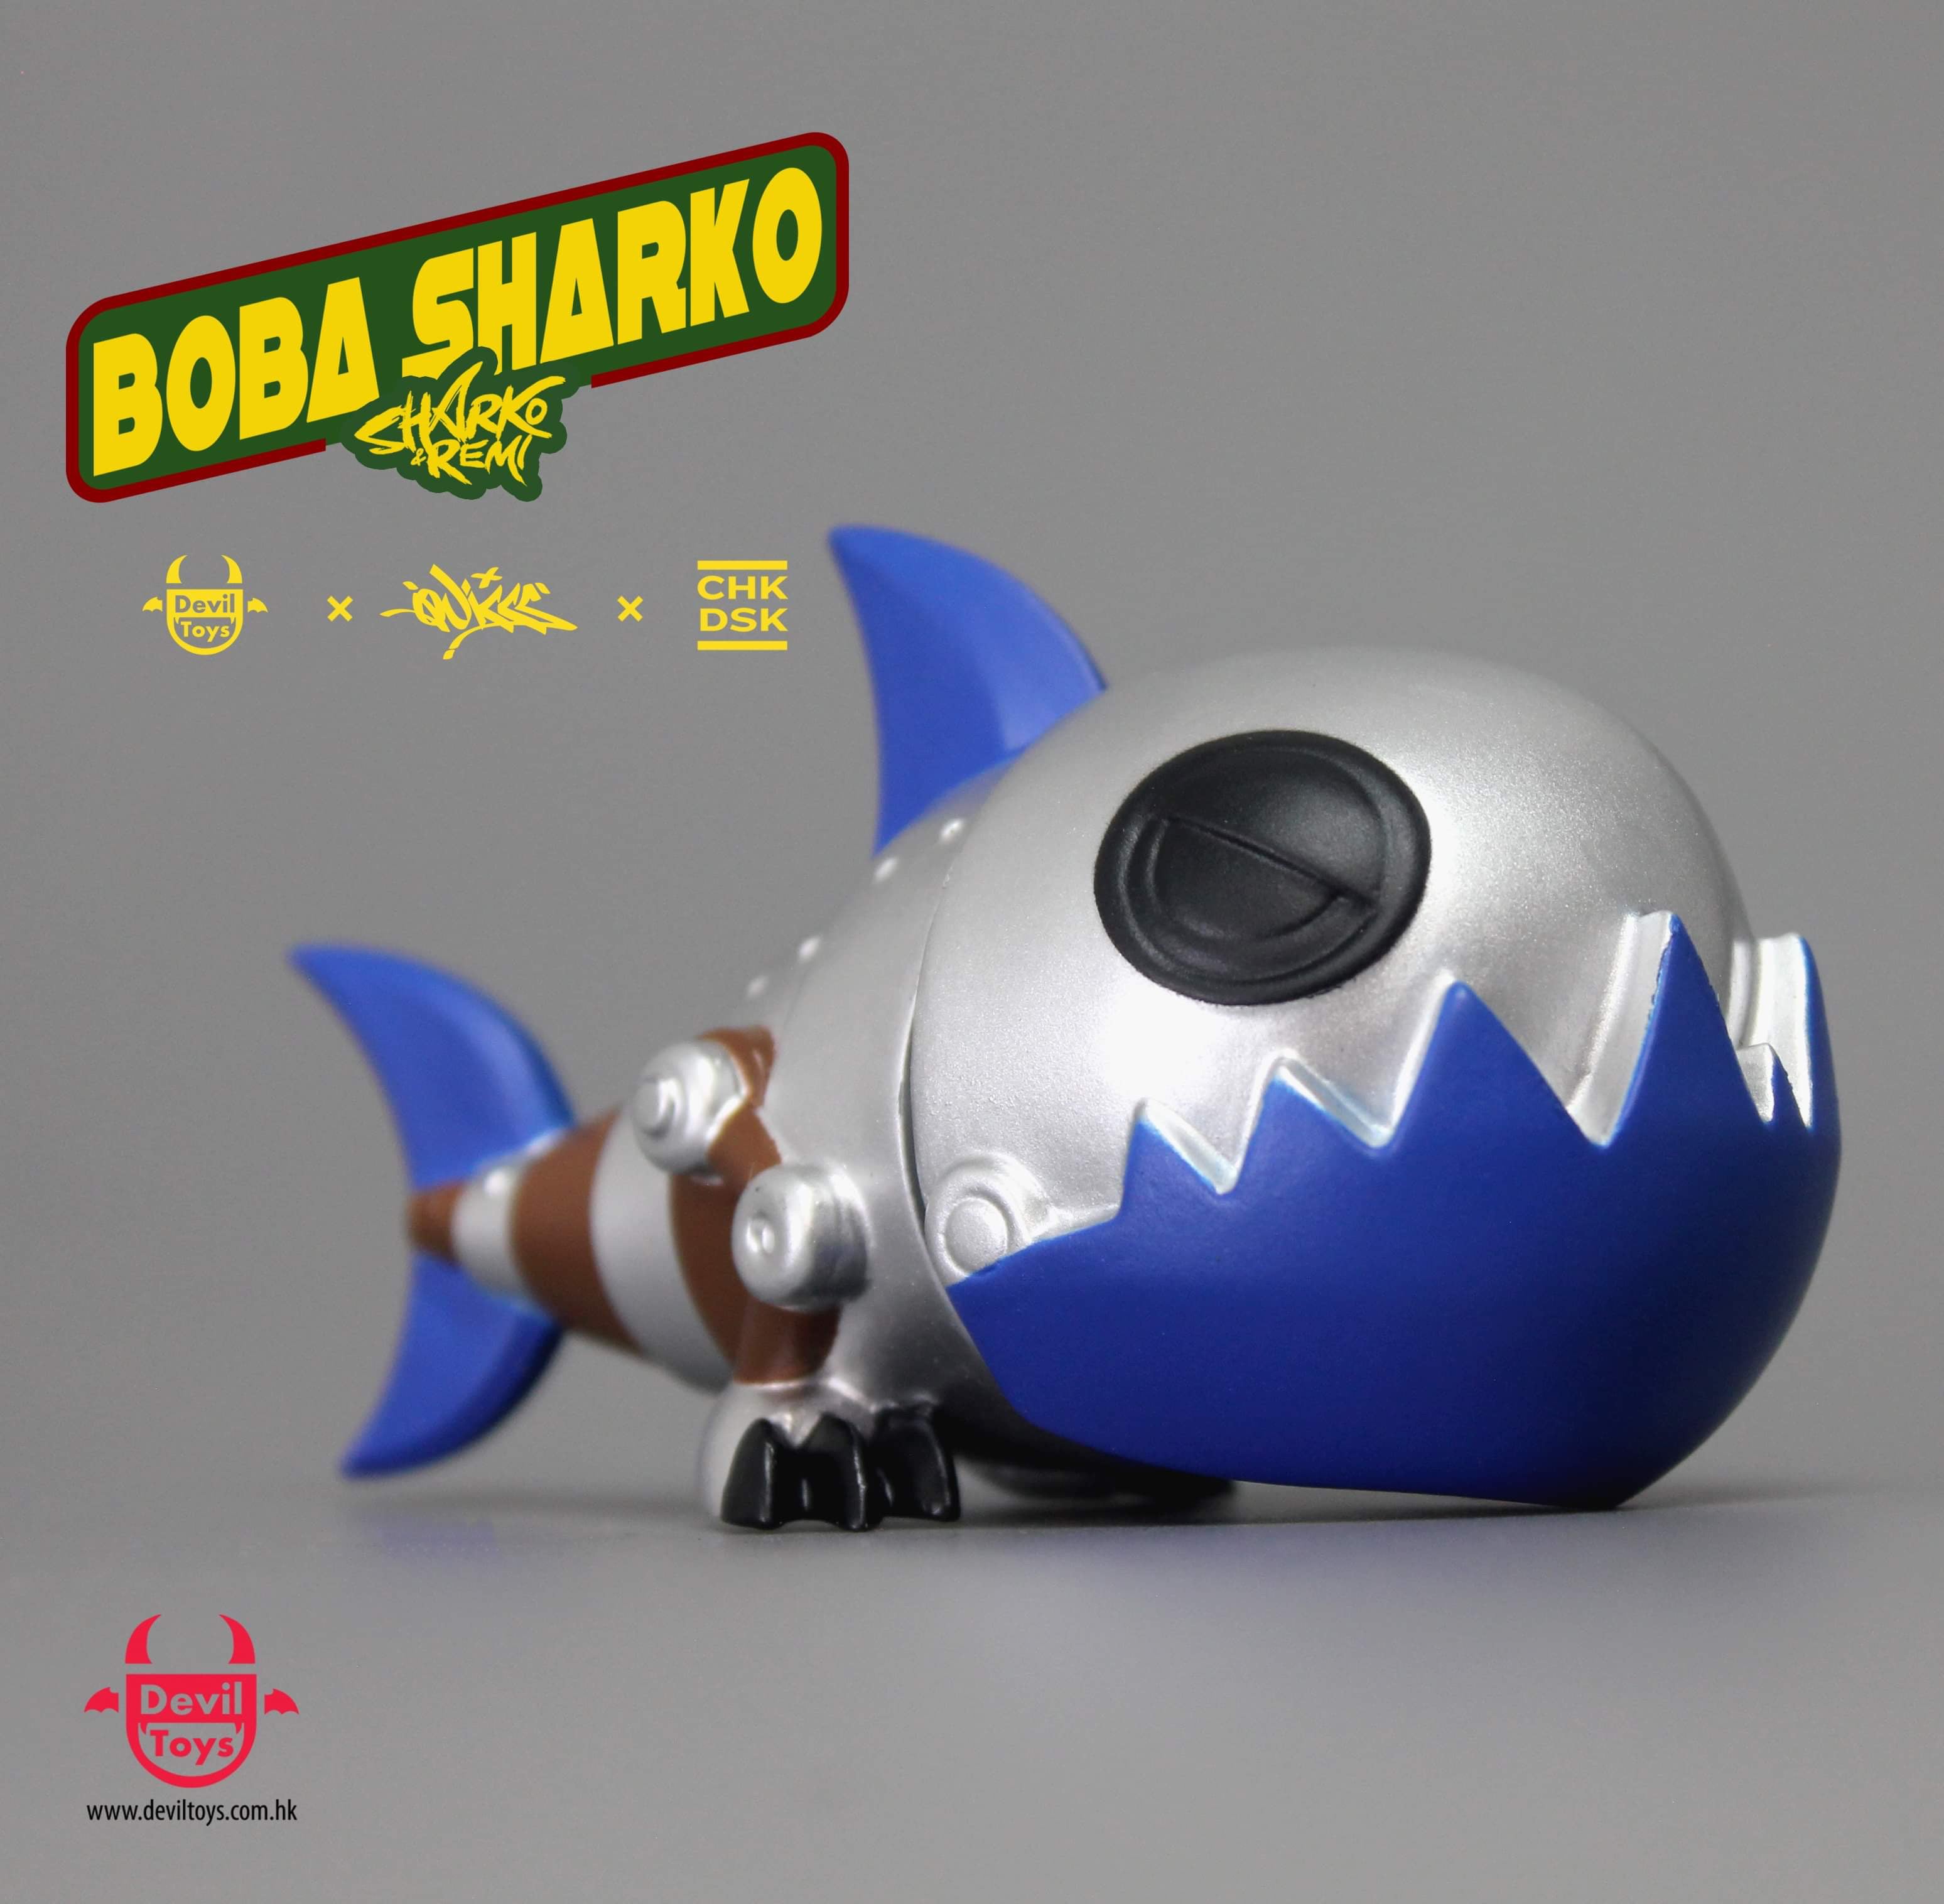 Boba Sharko & Remi by Quiccs x CHK DSK x Devil Toys